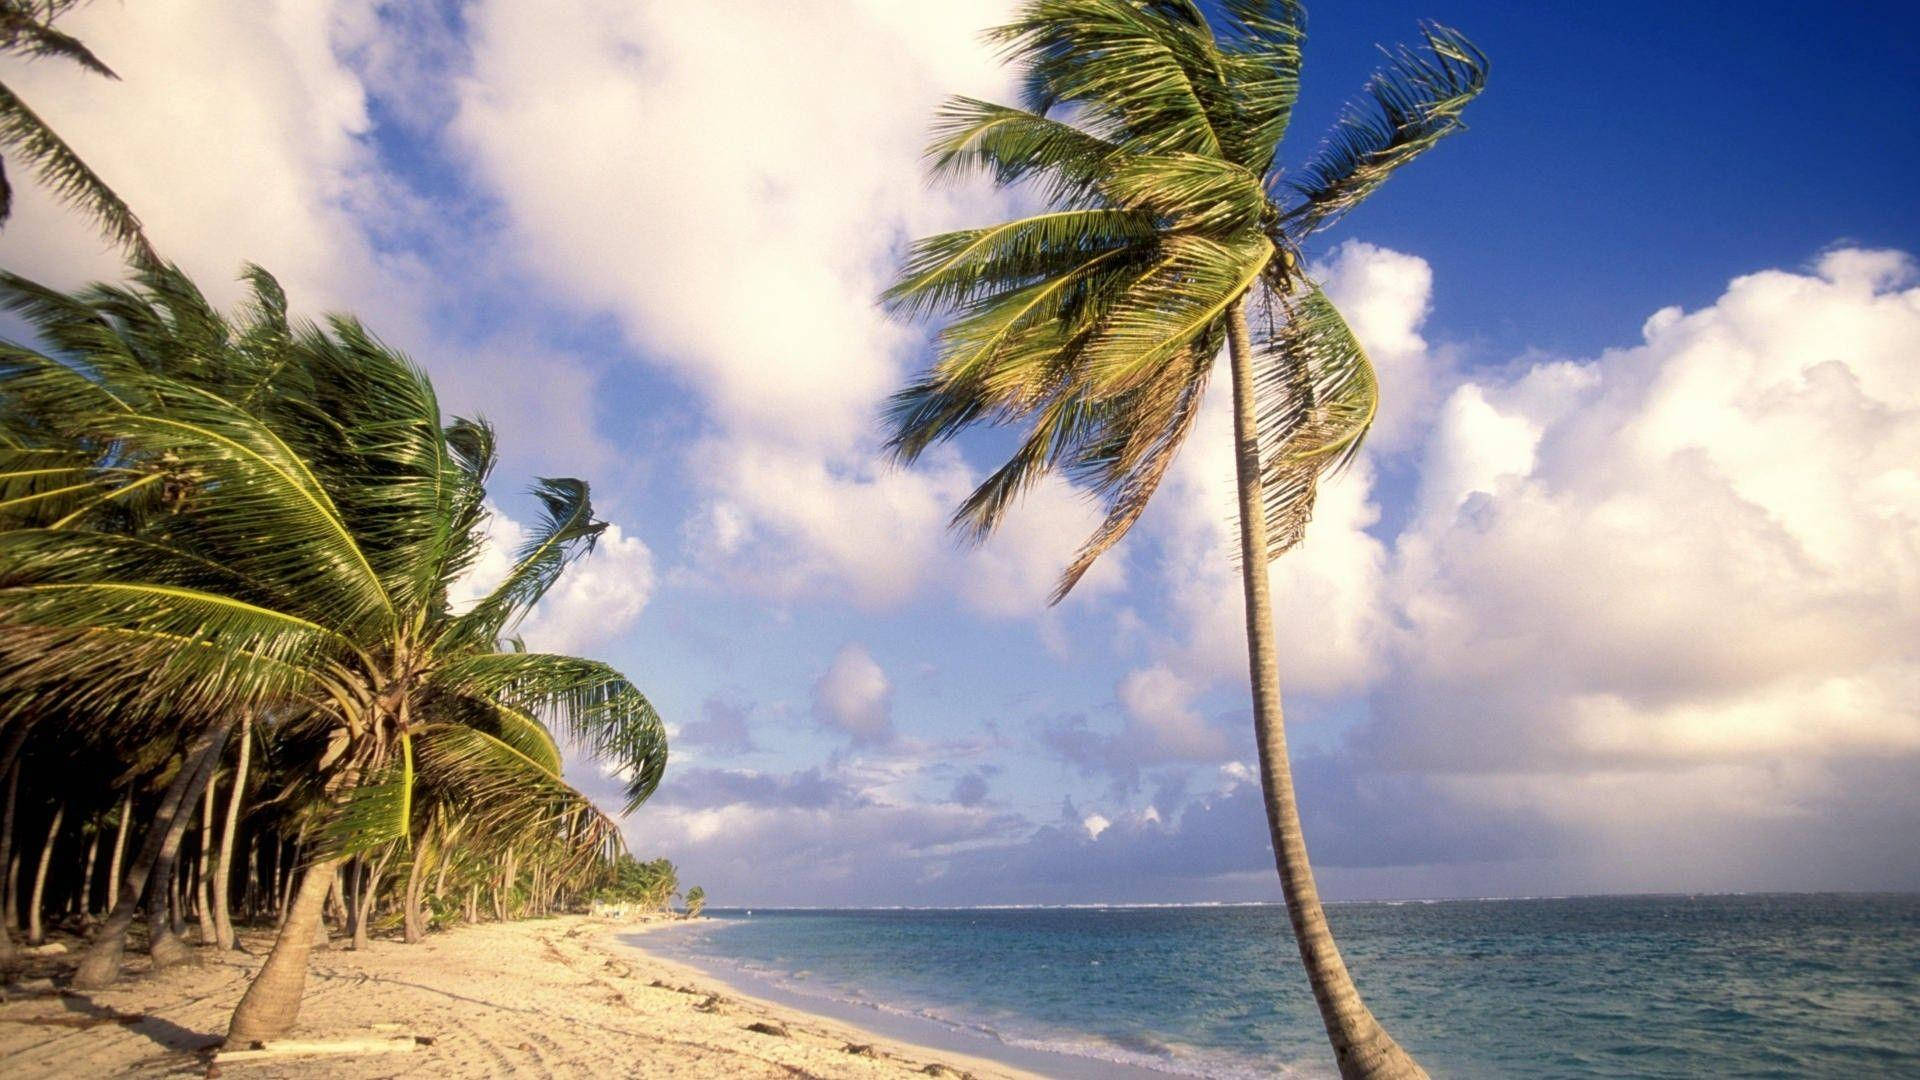 Windy Dominican Republic Beach Wallpaper